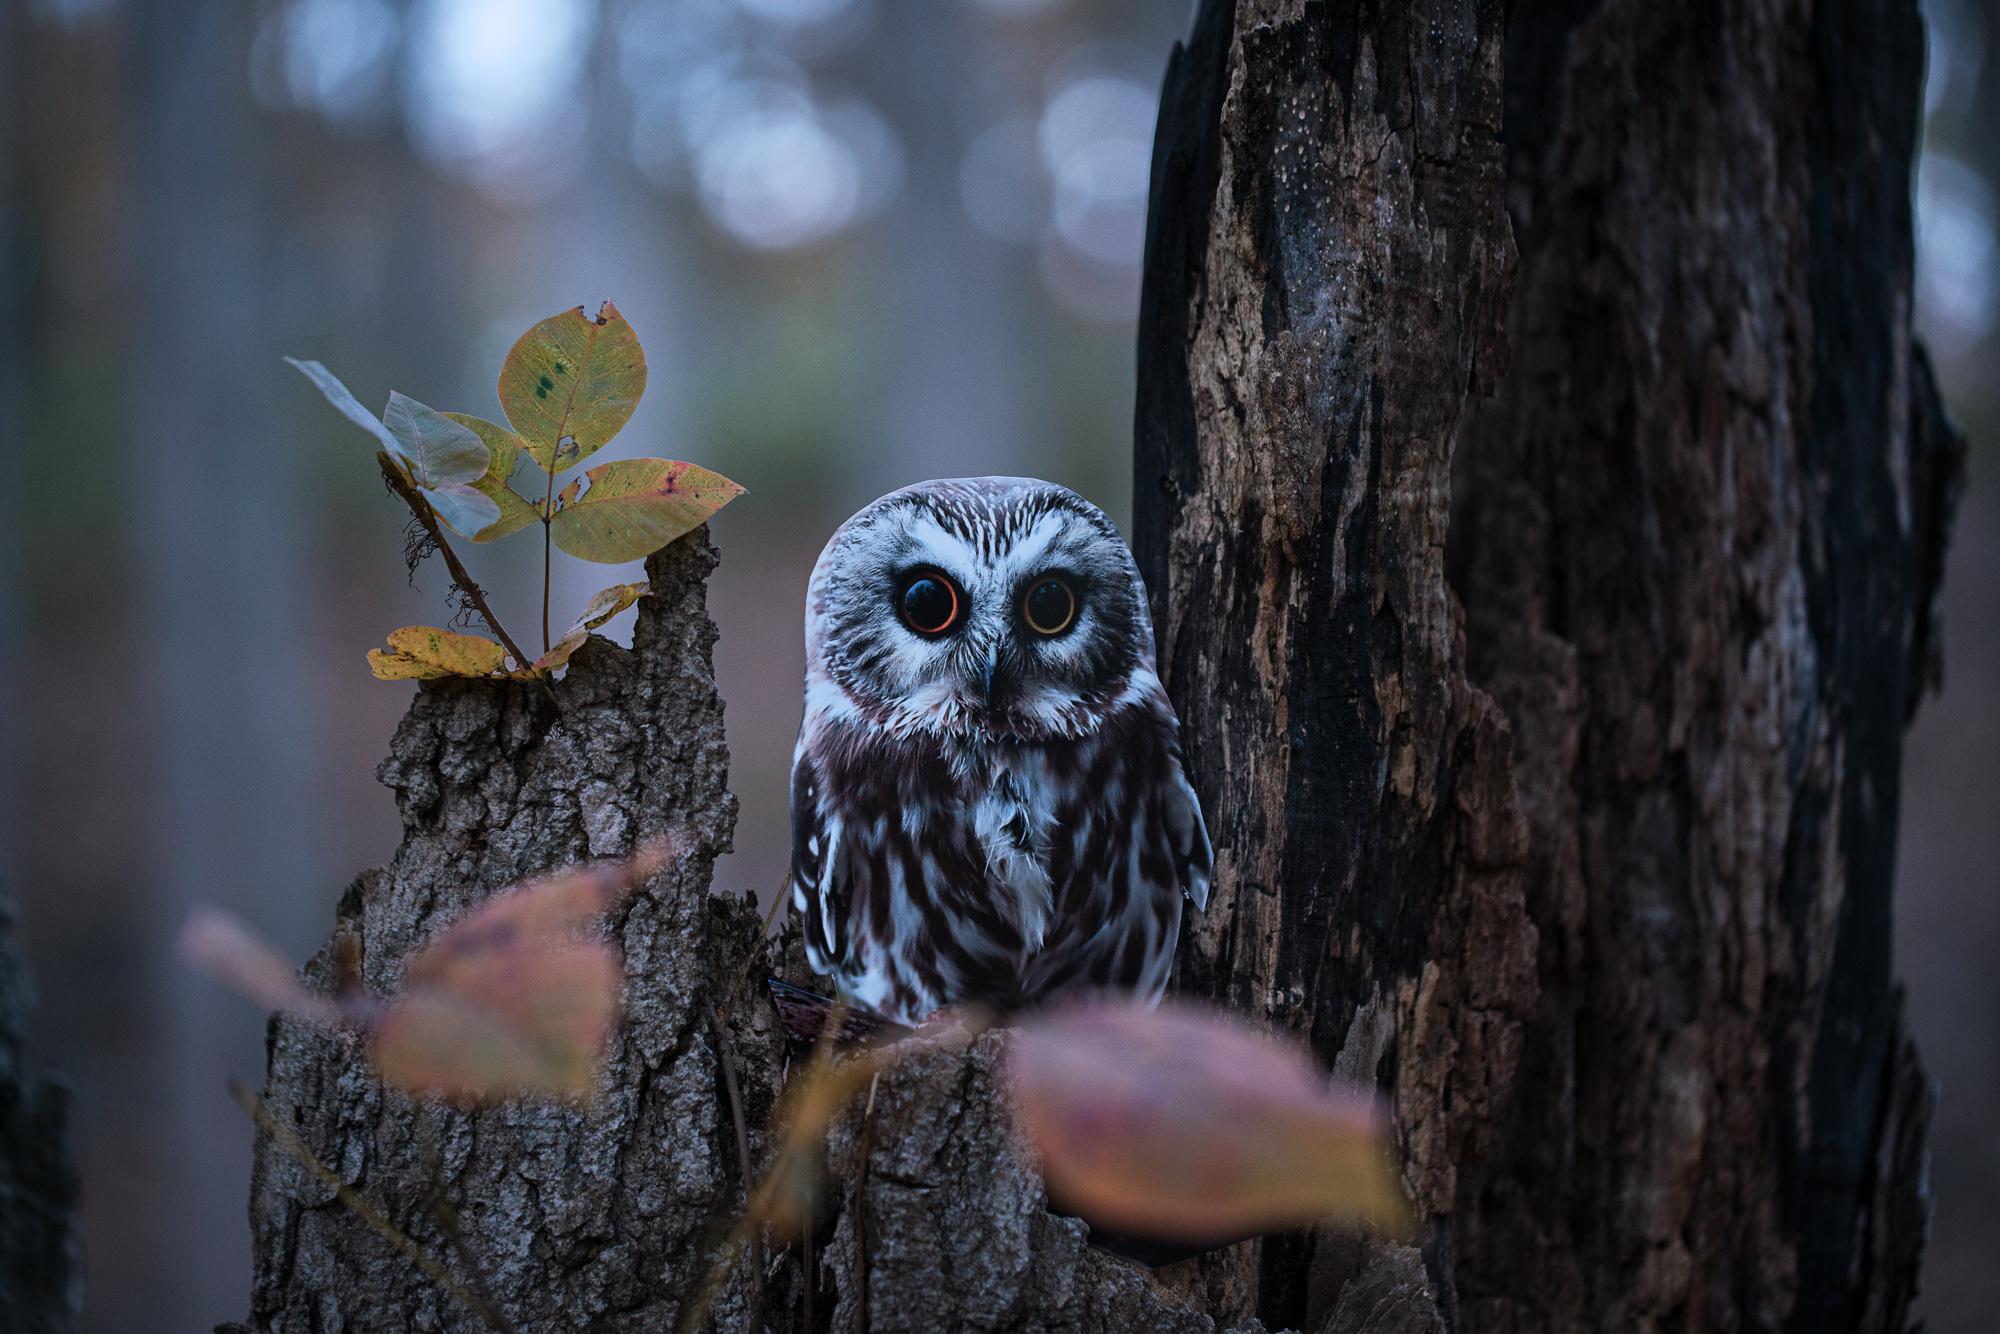 Carolyn Monastra Landscape Photograph - "Northern Saw-whet Owl"